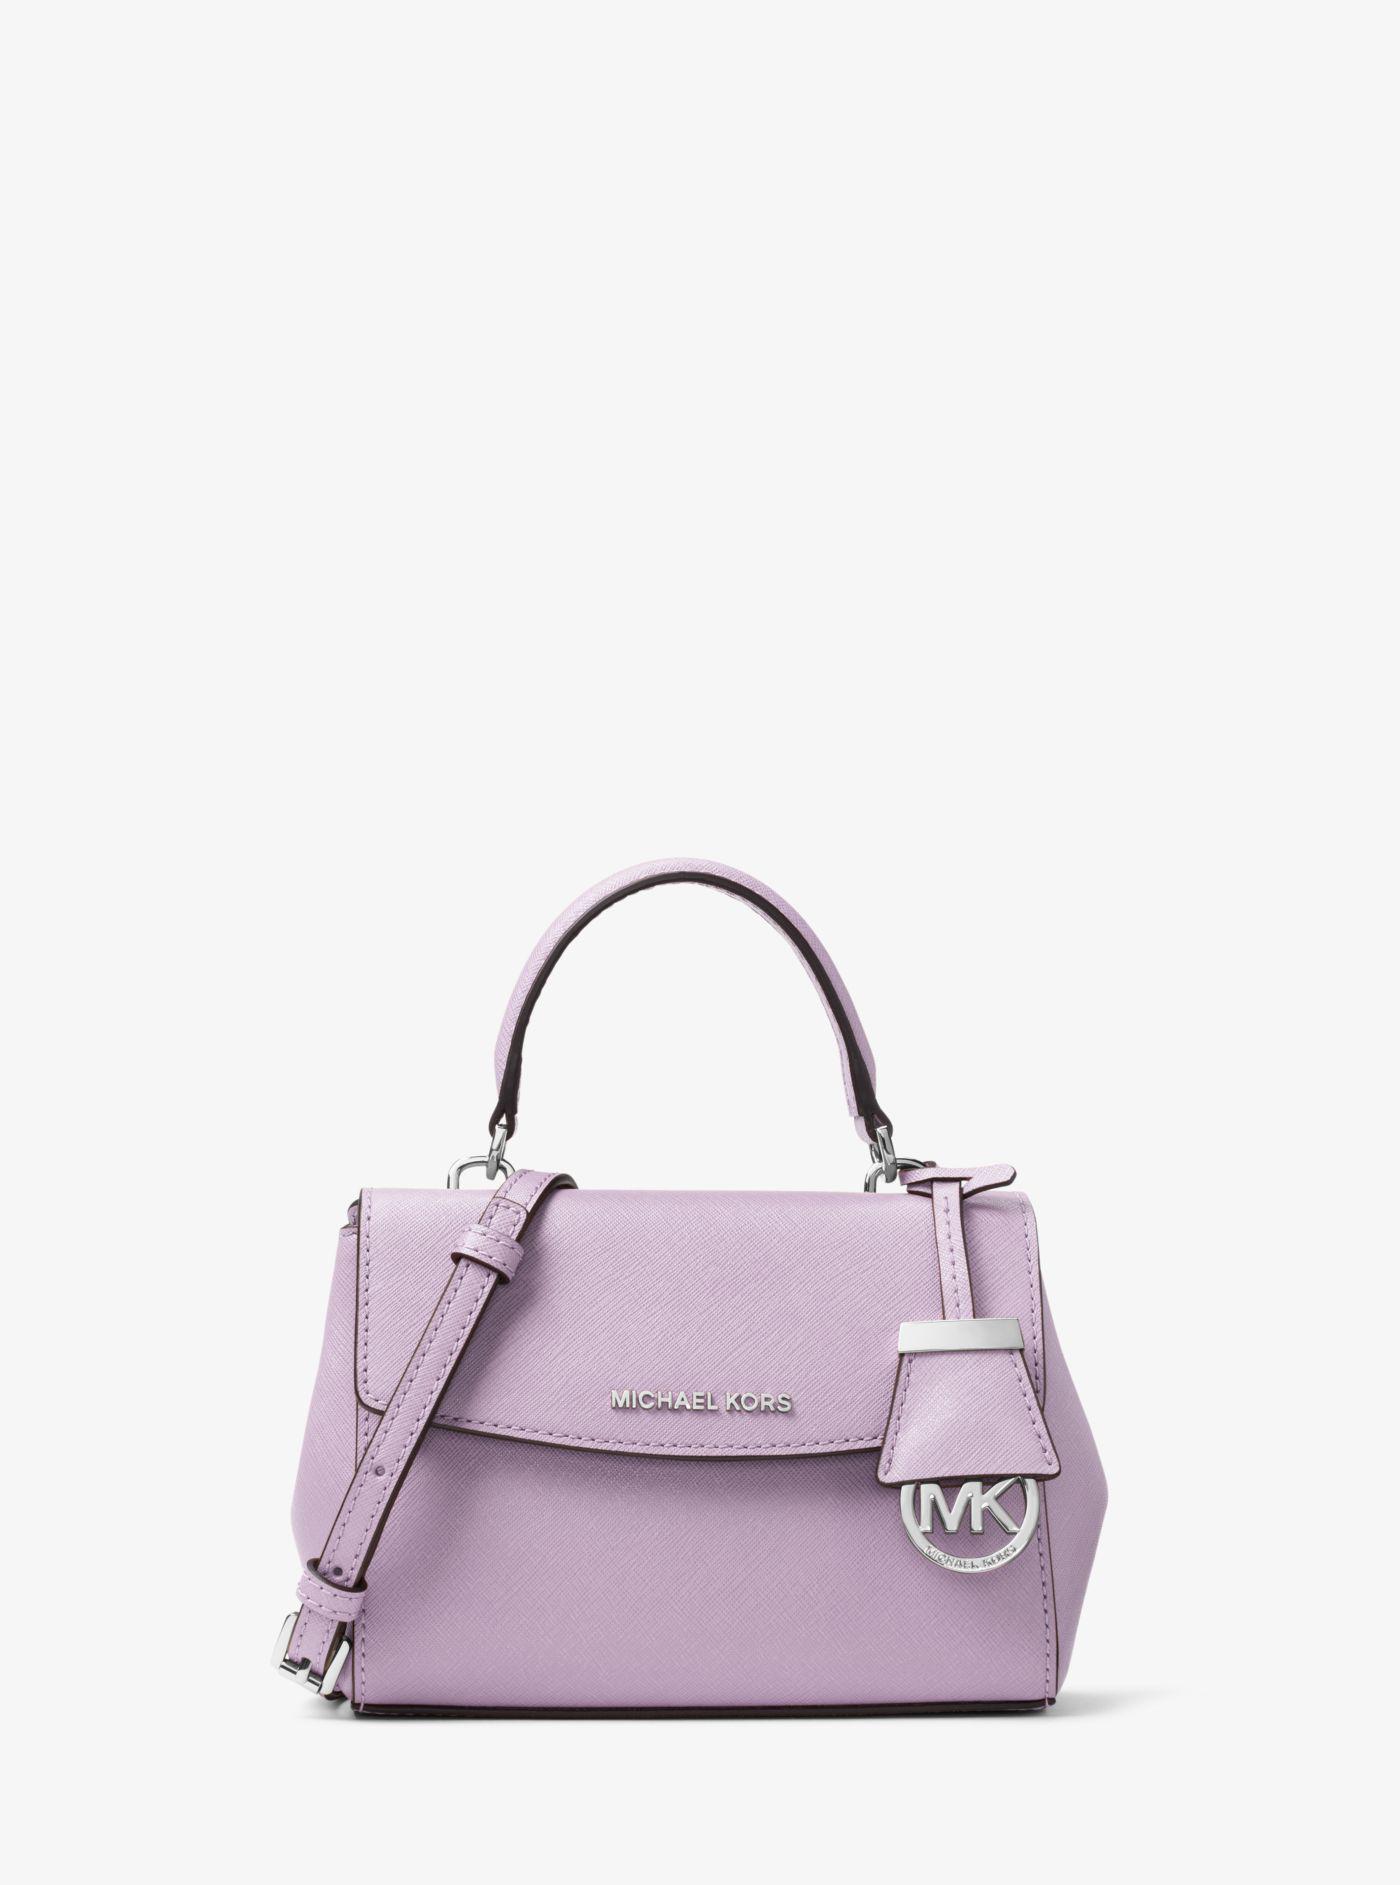 Michael Kors Ava Extra-small Saffiano Leather Crossbody Bag in Purple - Lyst